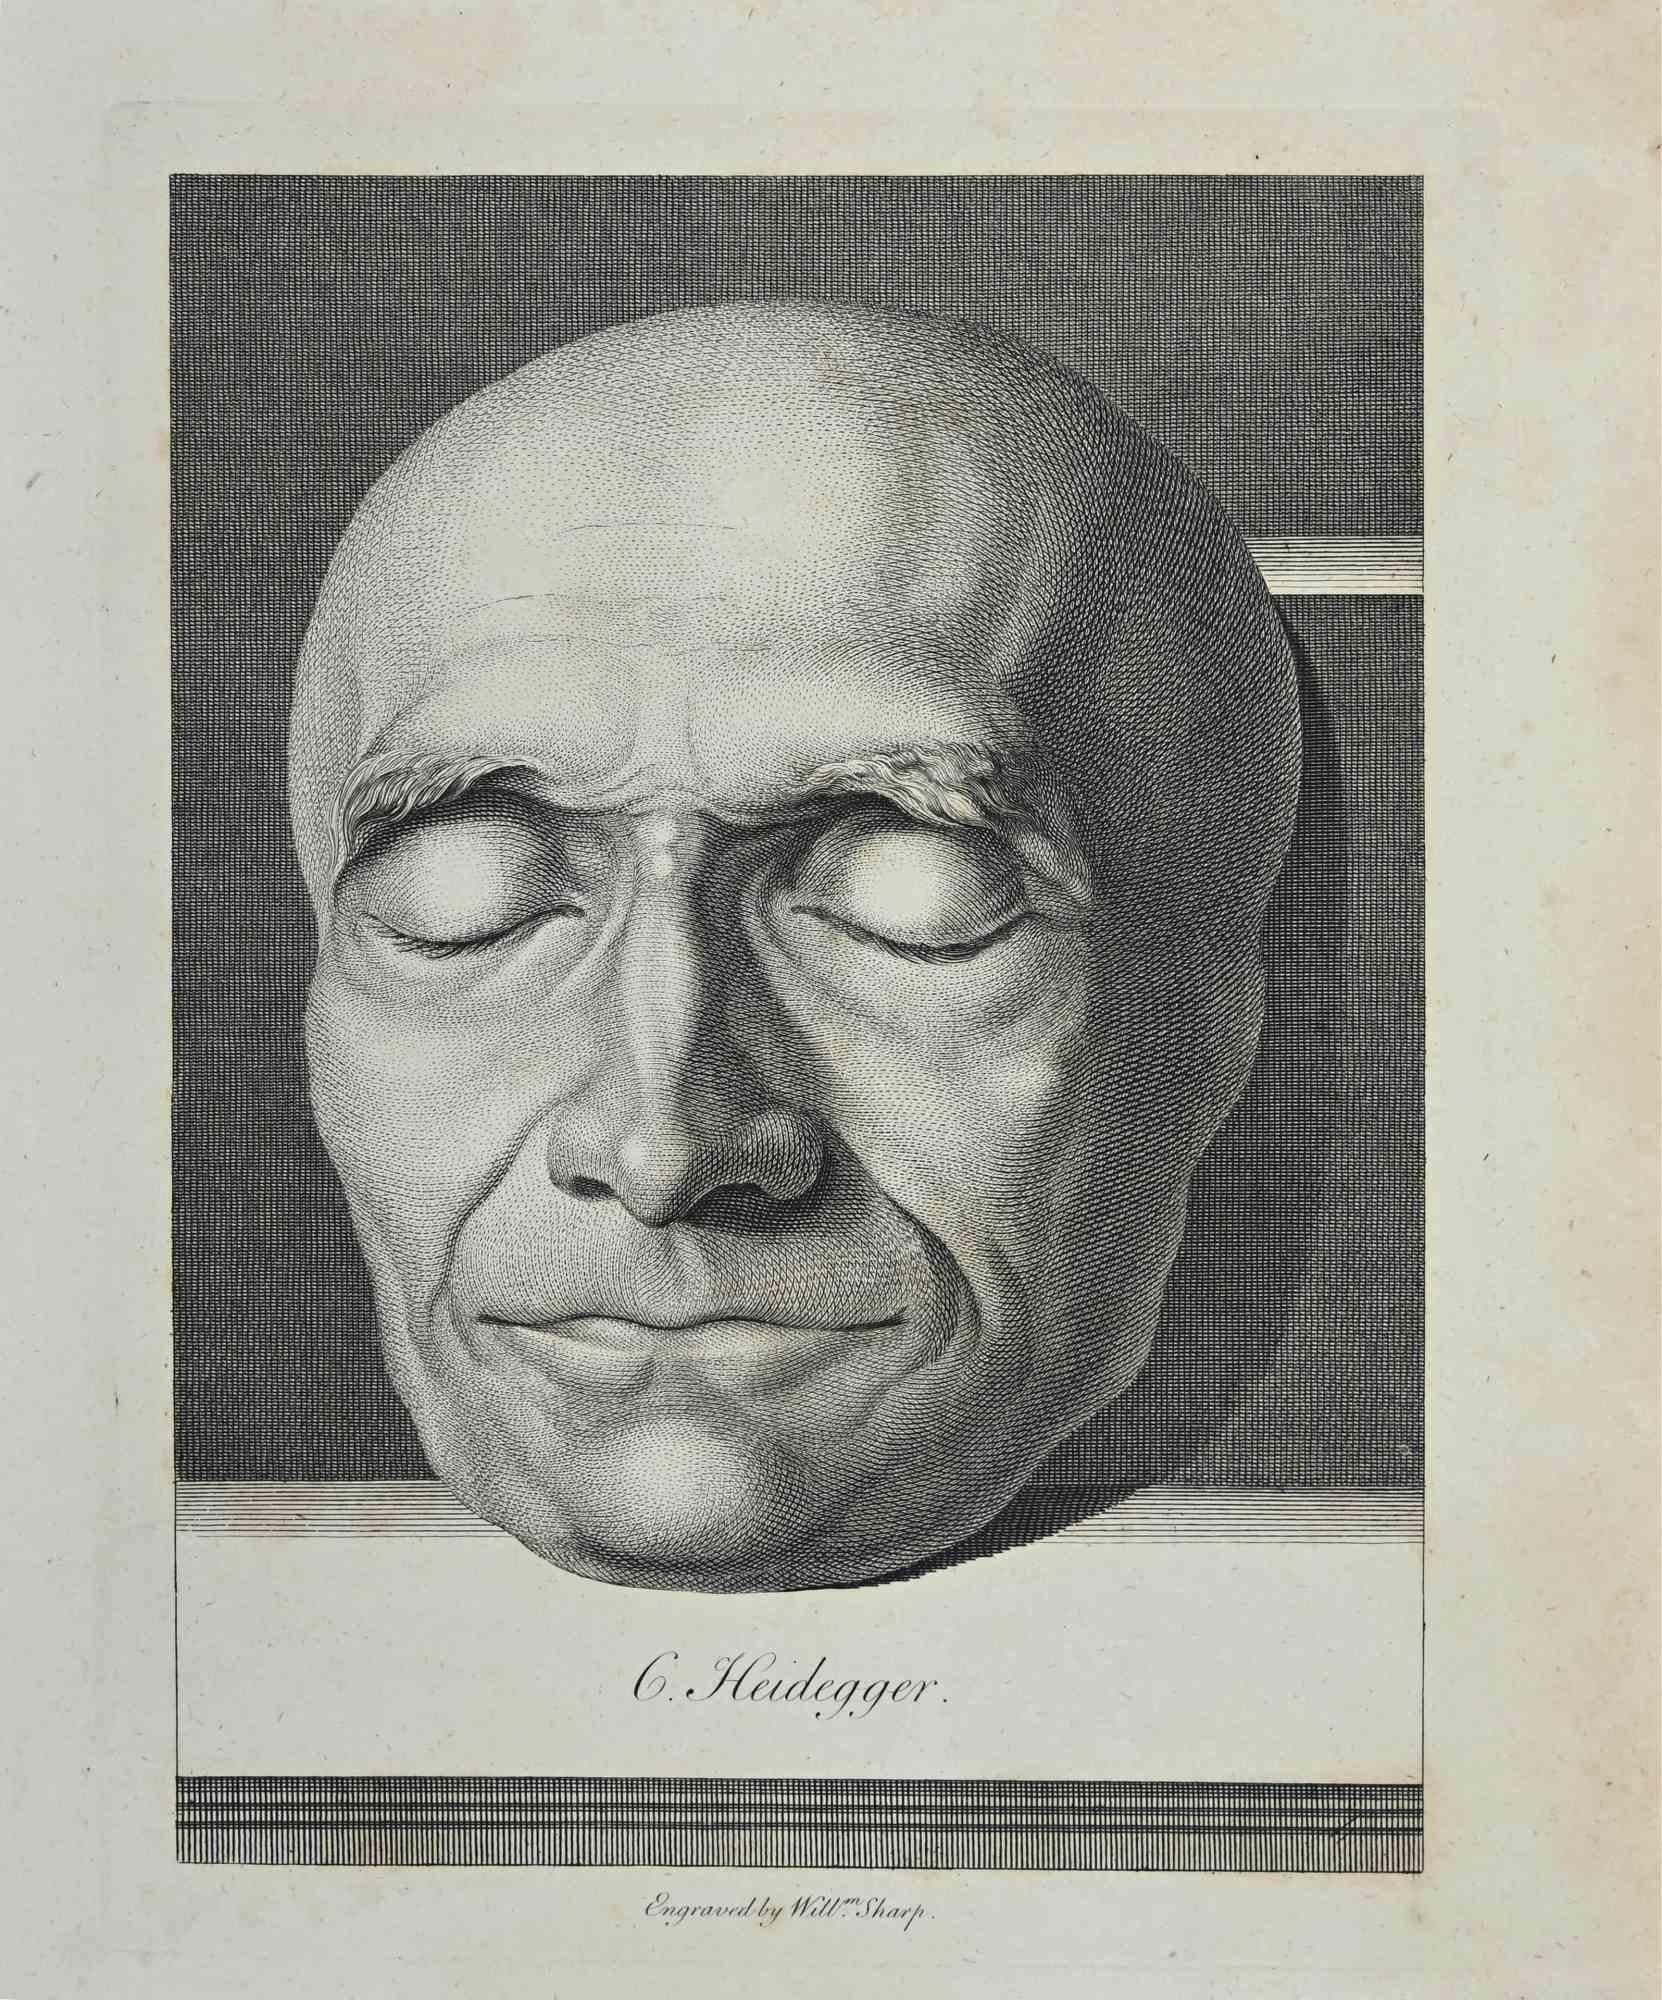 Portrait de G. Heidegger - Gravure originale de William Sharp - 1810